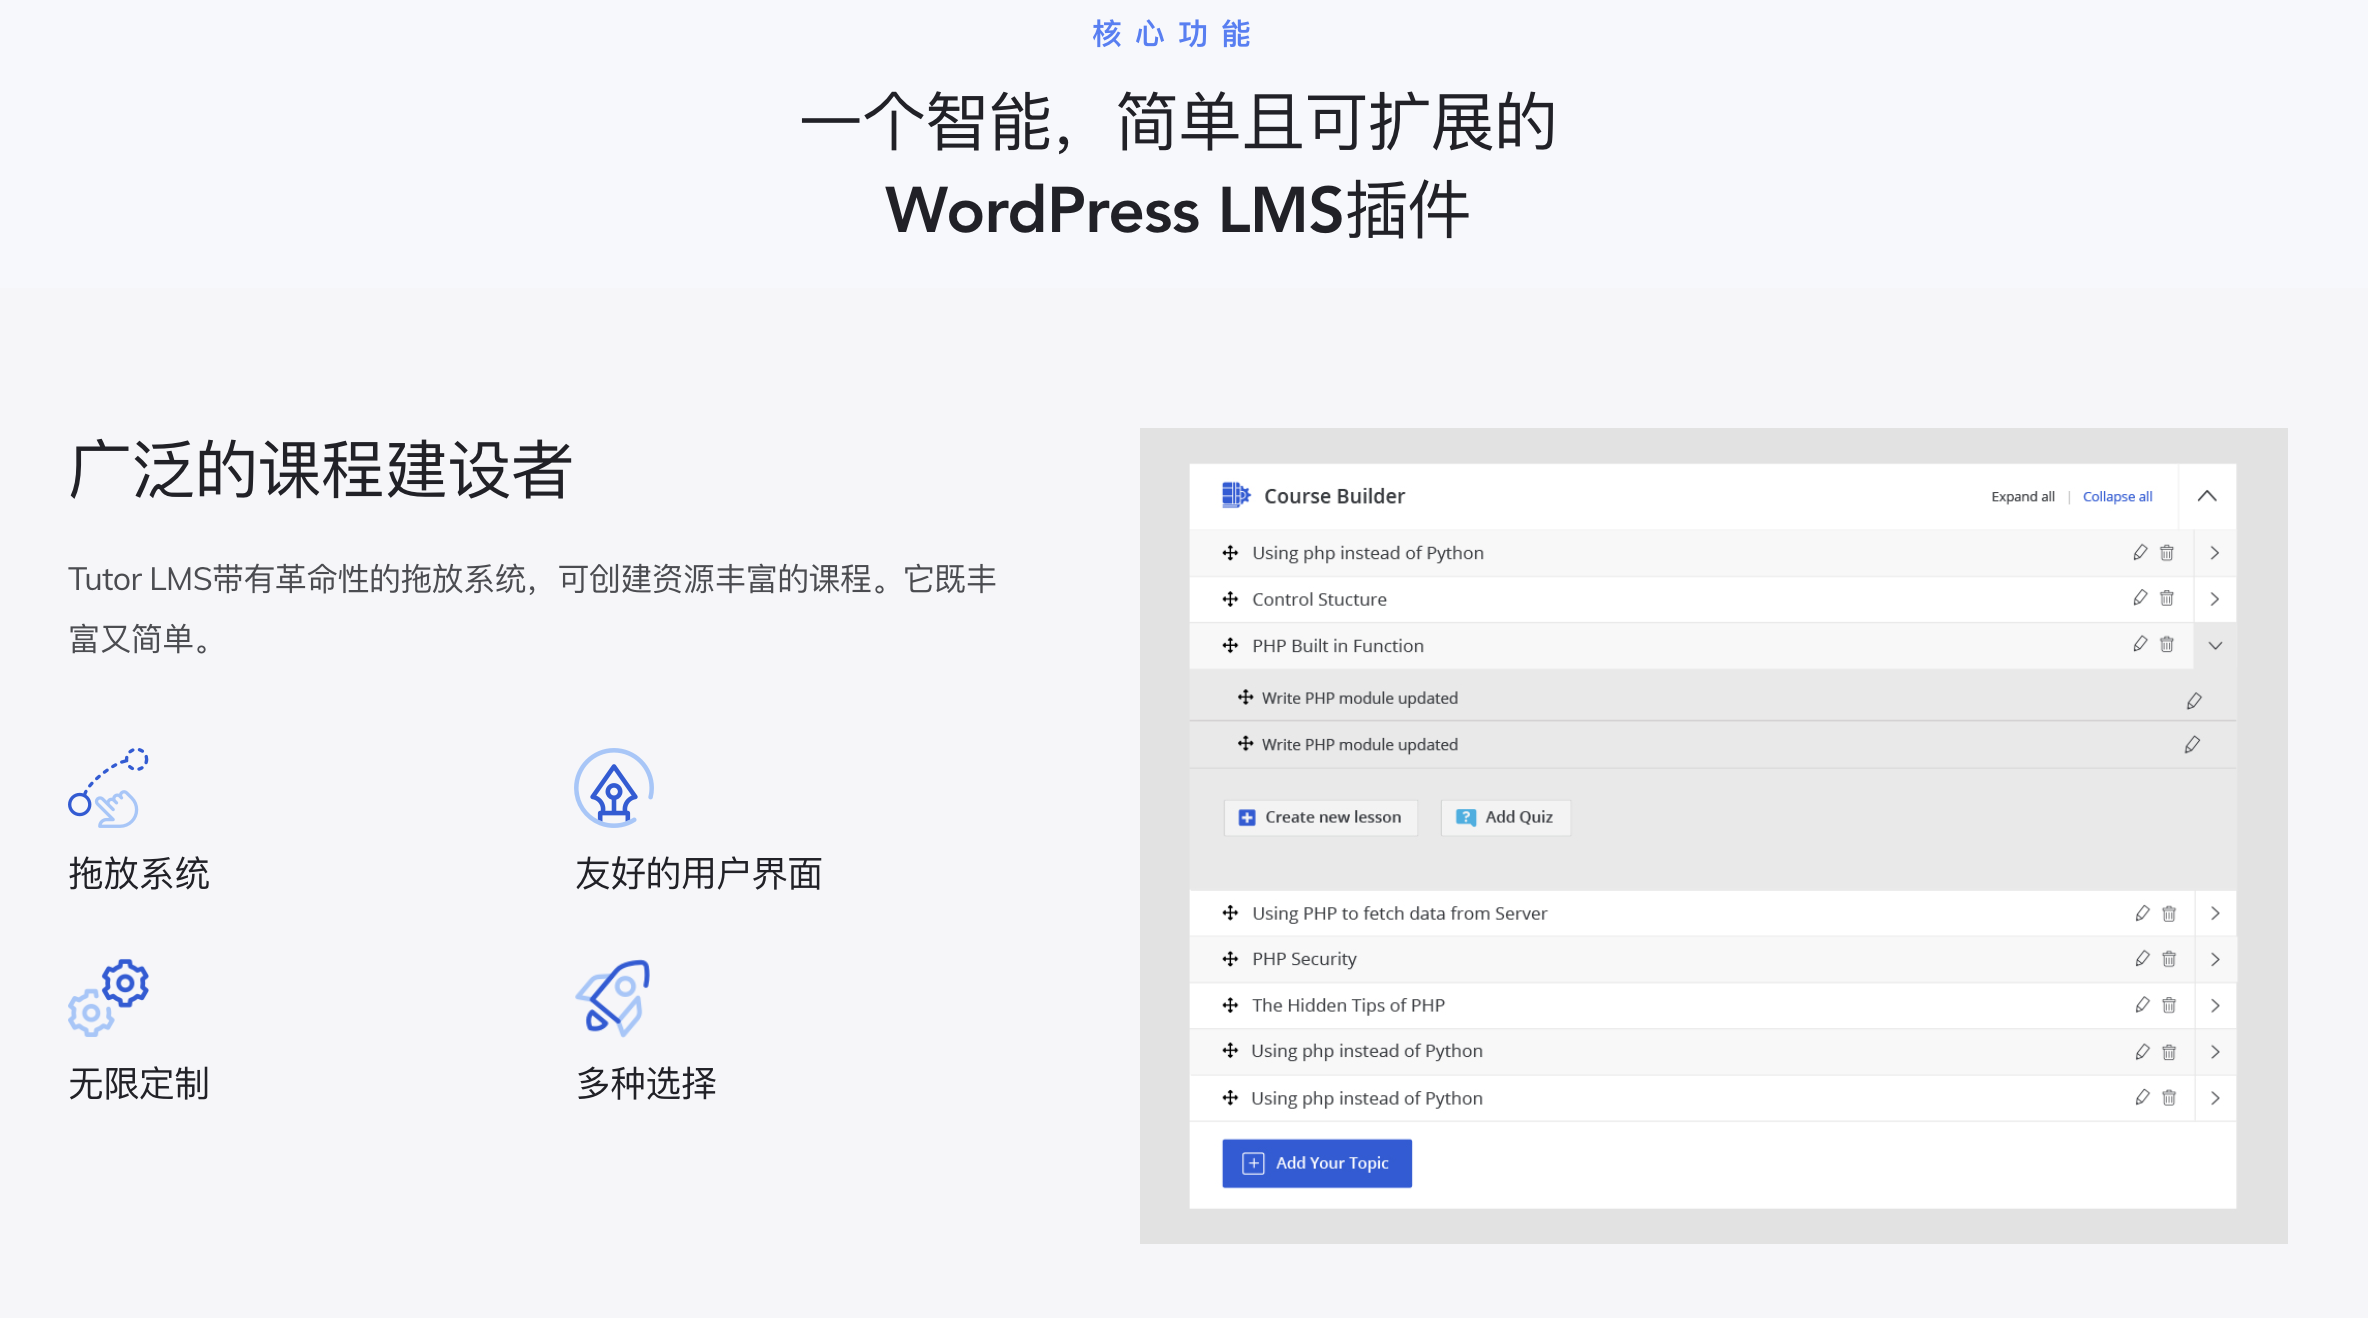 Tutor LMS Pro WordPress Plugin 智能、简单、可扩展在线学习系统插件